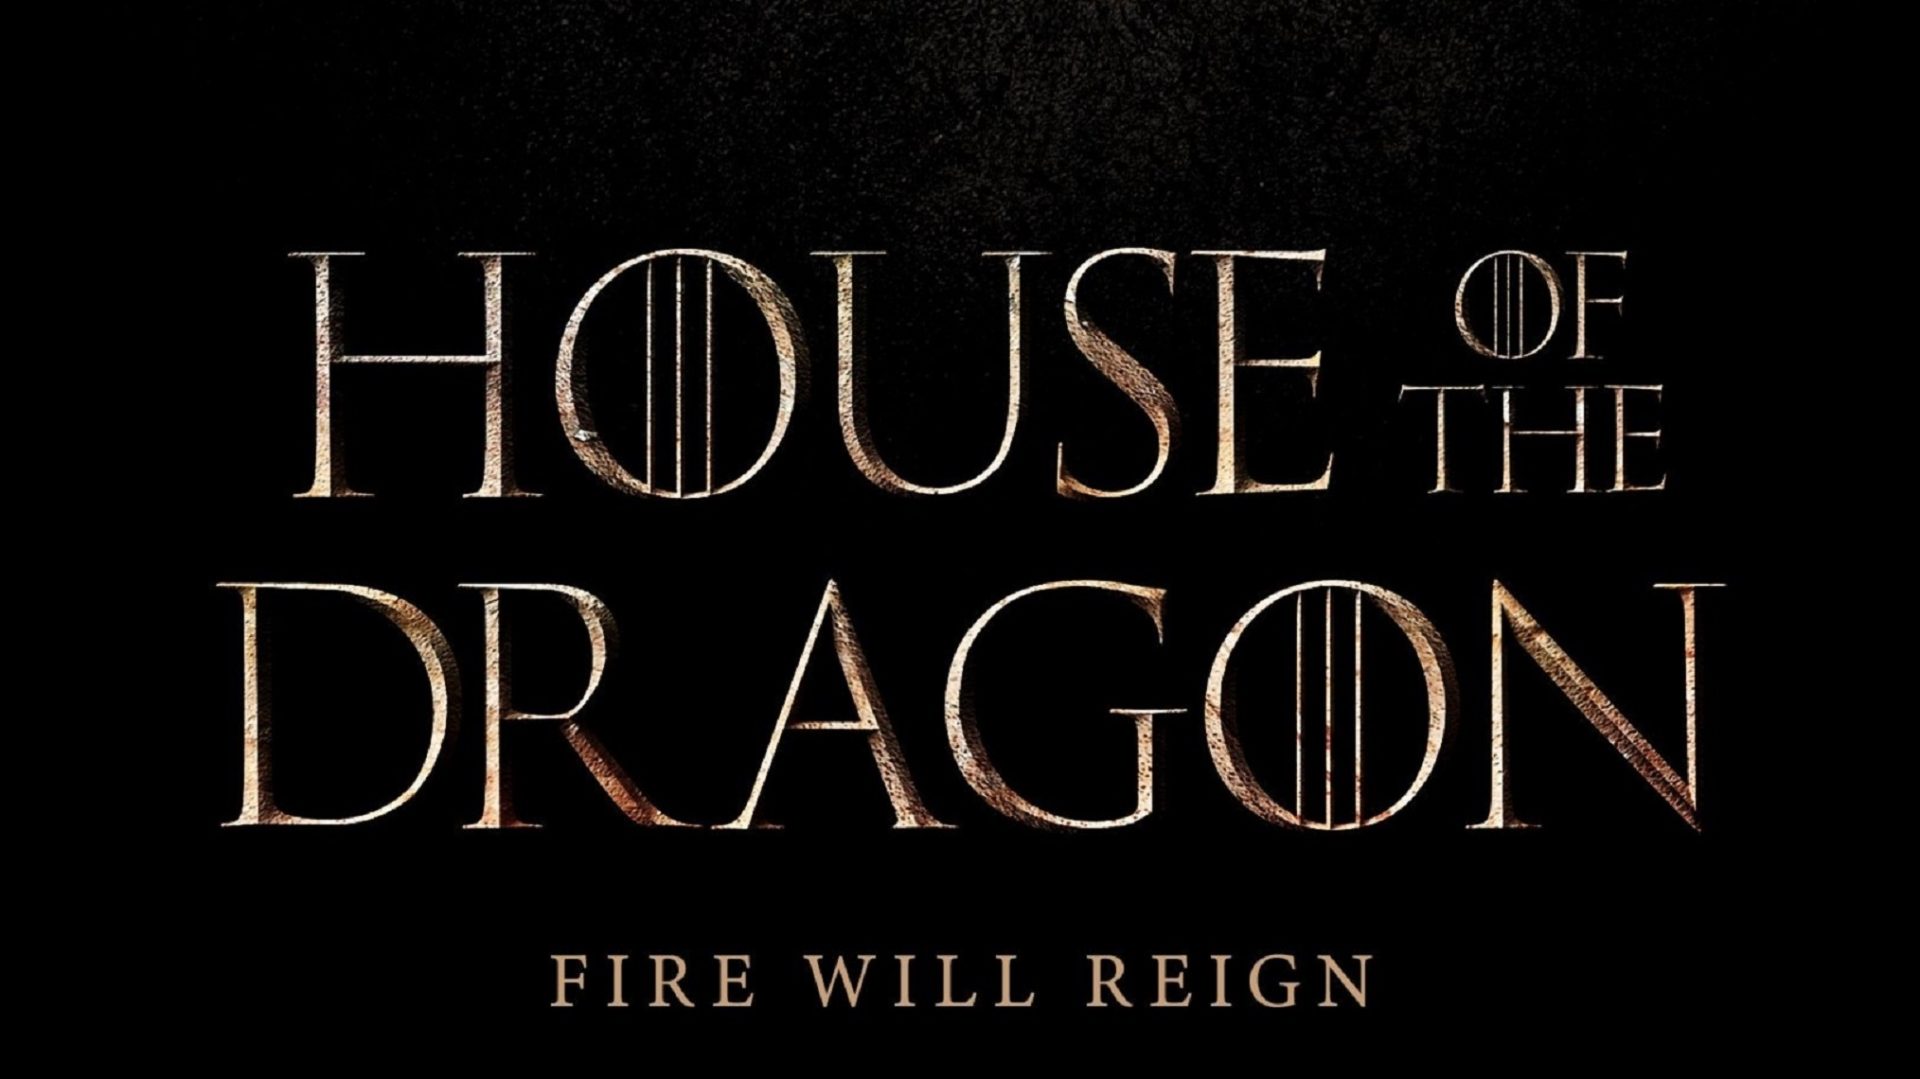 ‘House of the Dragon’ : สิ่งที่คุณควรรู้ก่อนดูซีรีส์ที่ควรค่าแก่การรอคอย